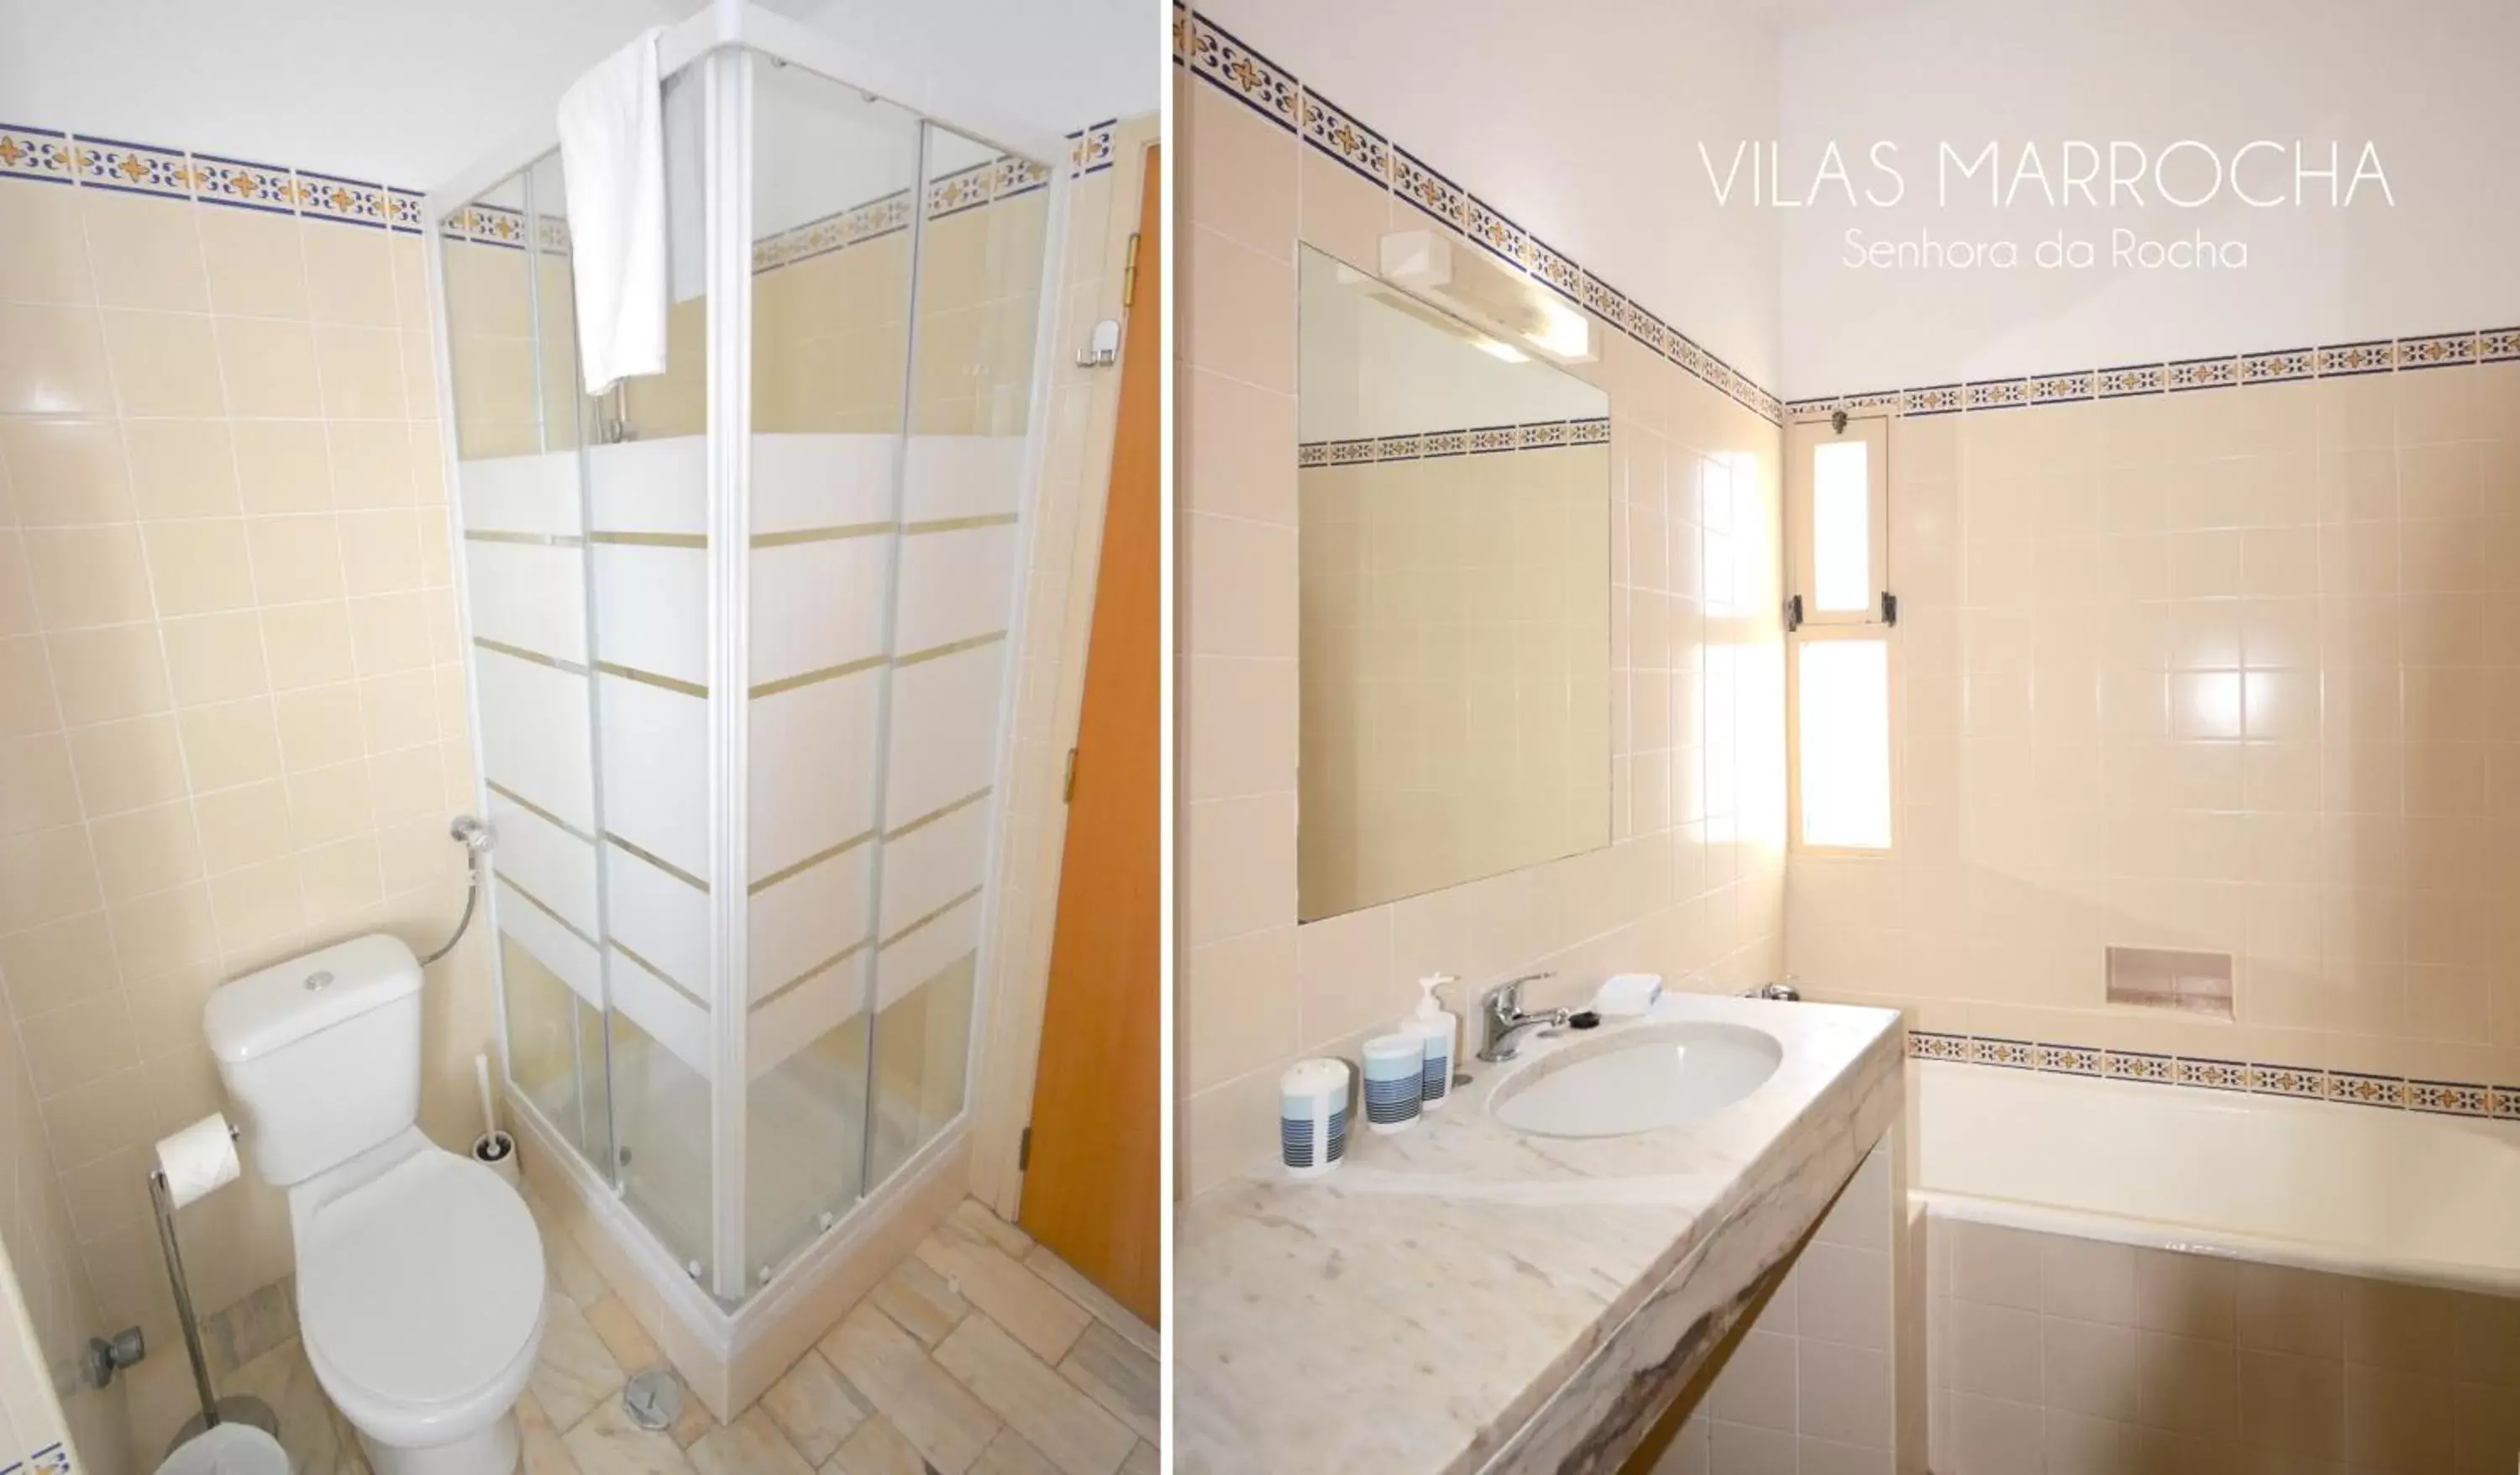 Shower, Bathroom in Vilas Marrocha